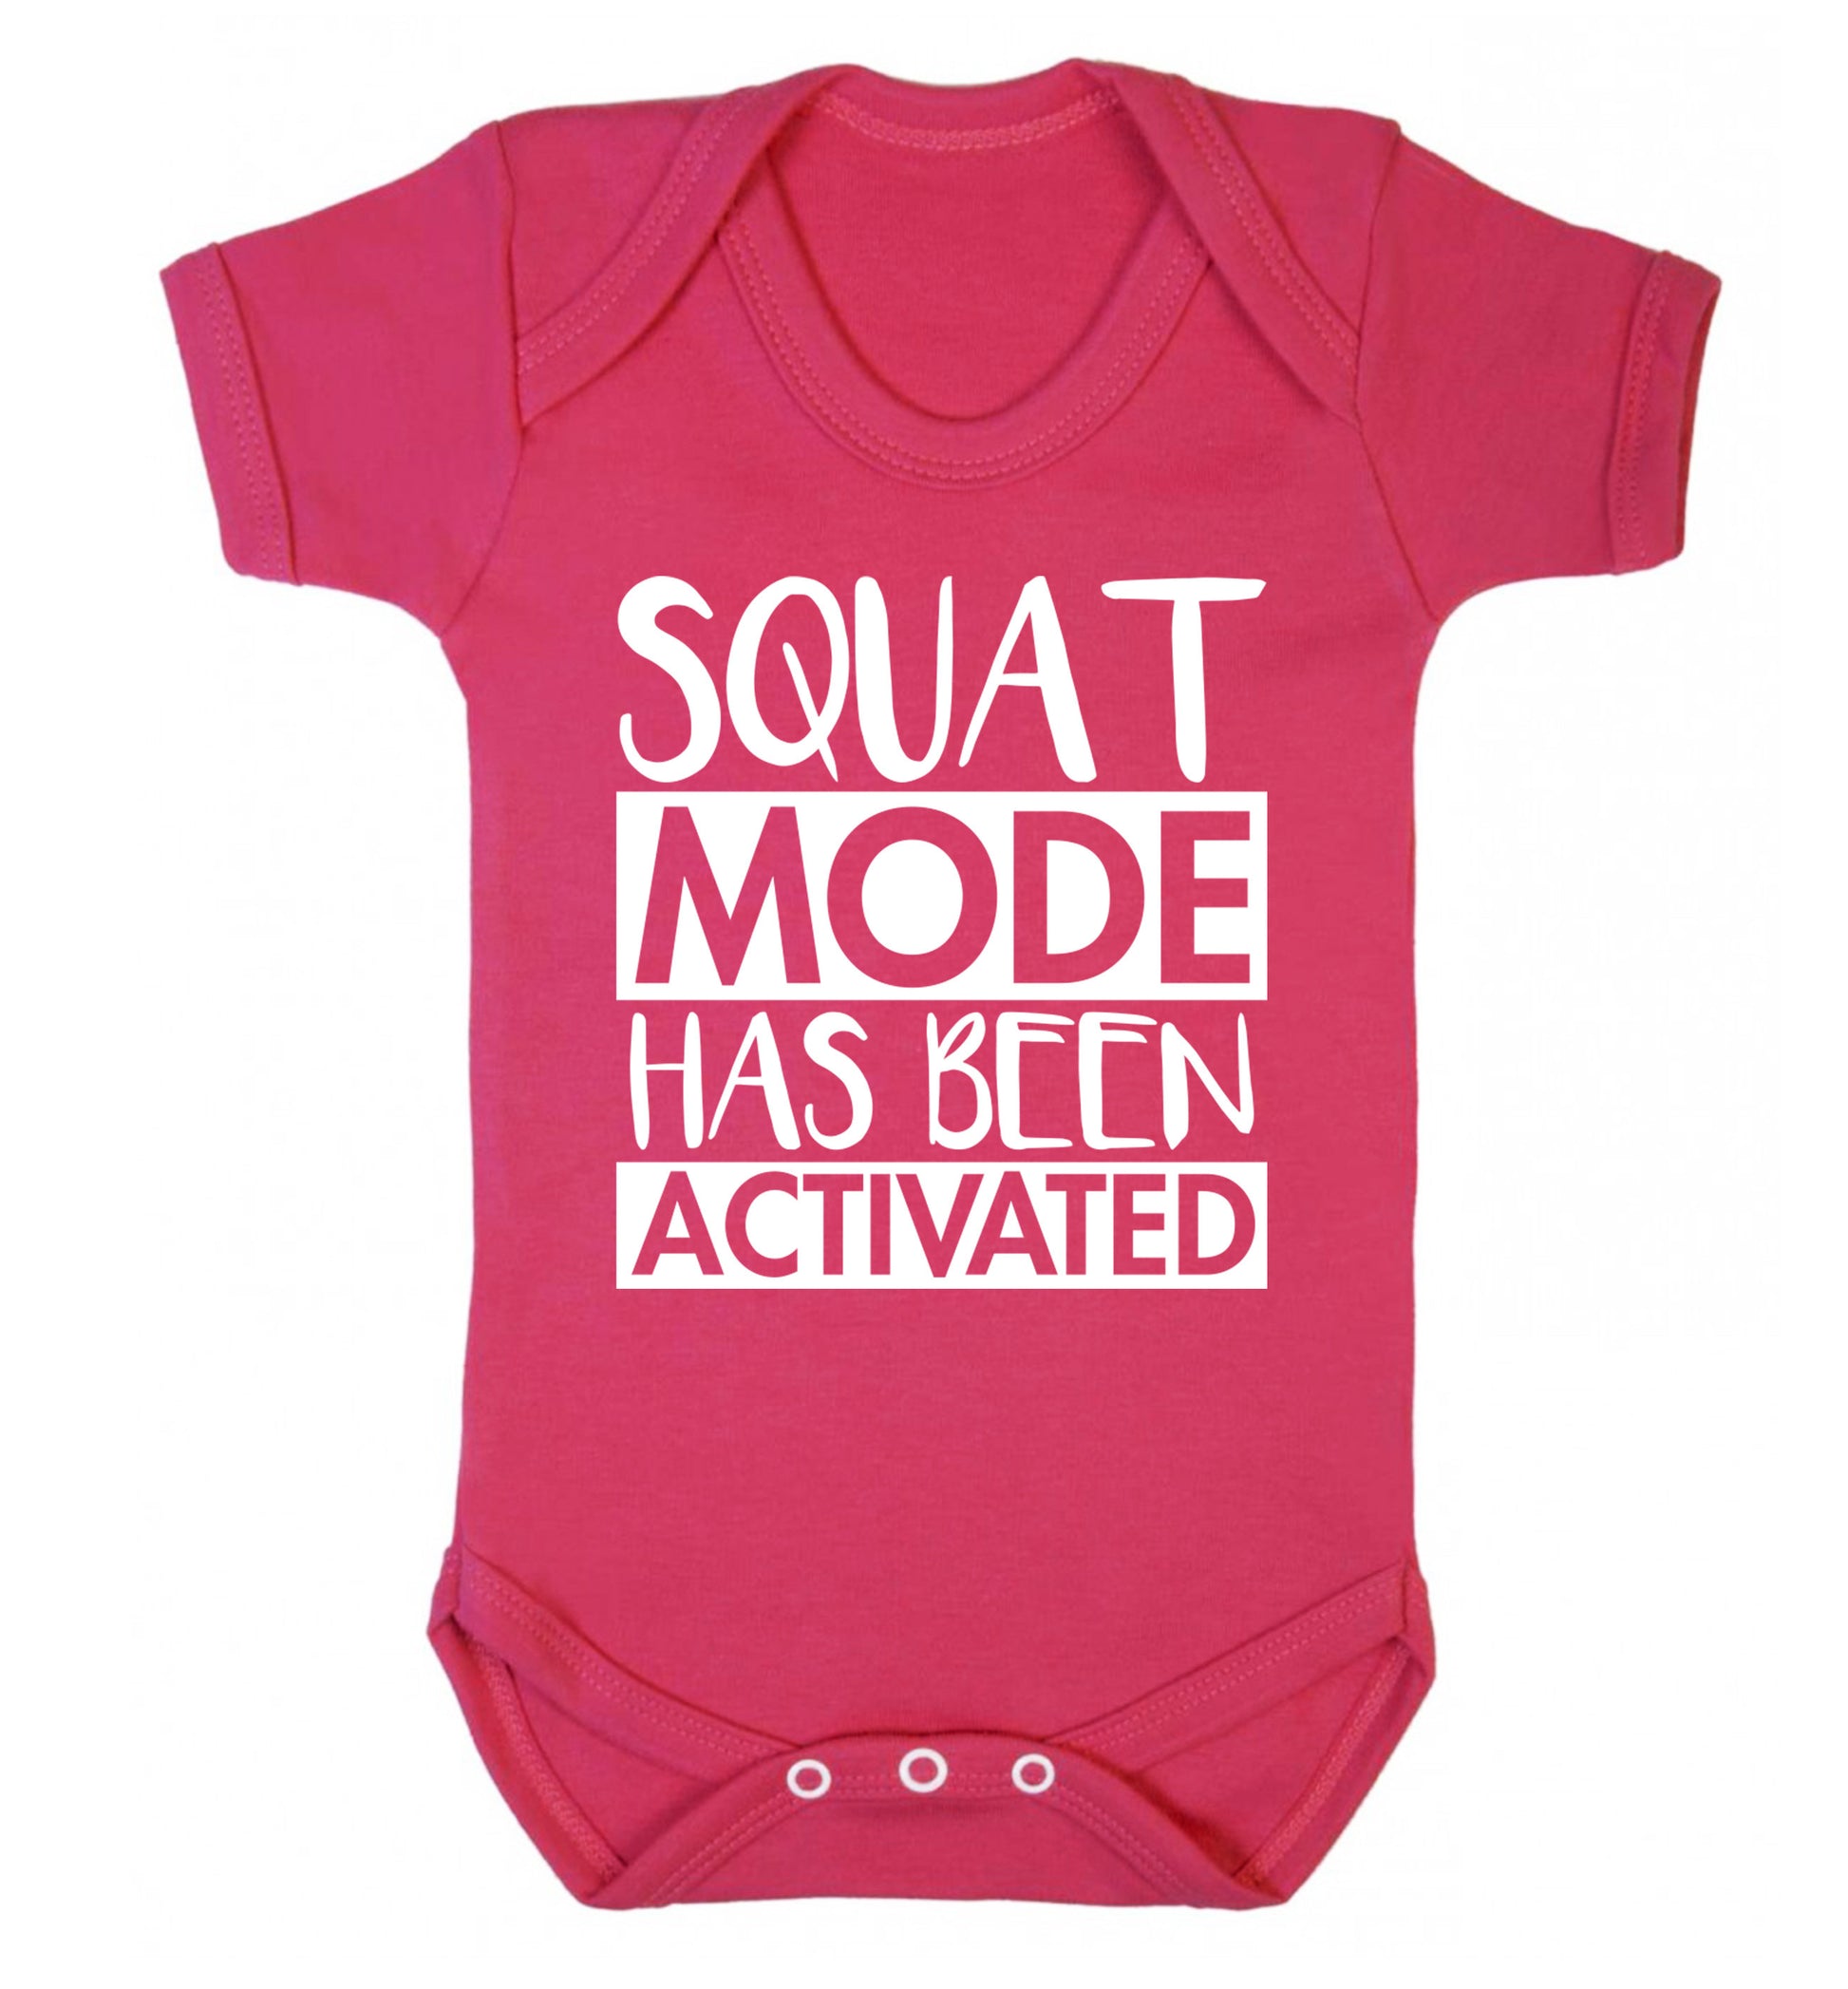 Squat mode activated Baby Vest dark pink 18-24 months